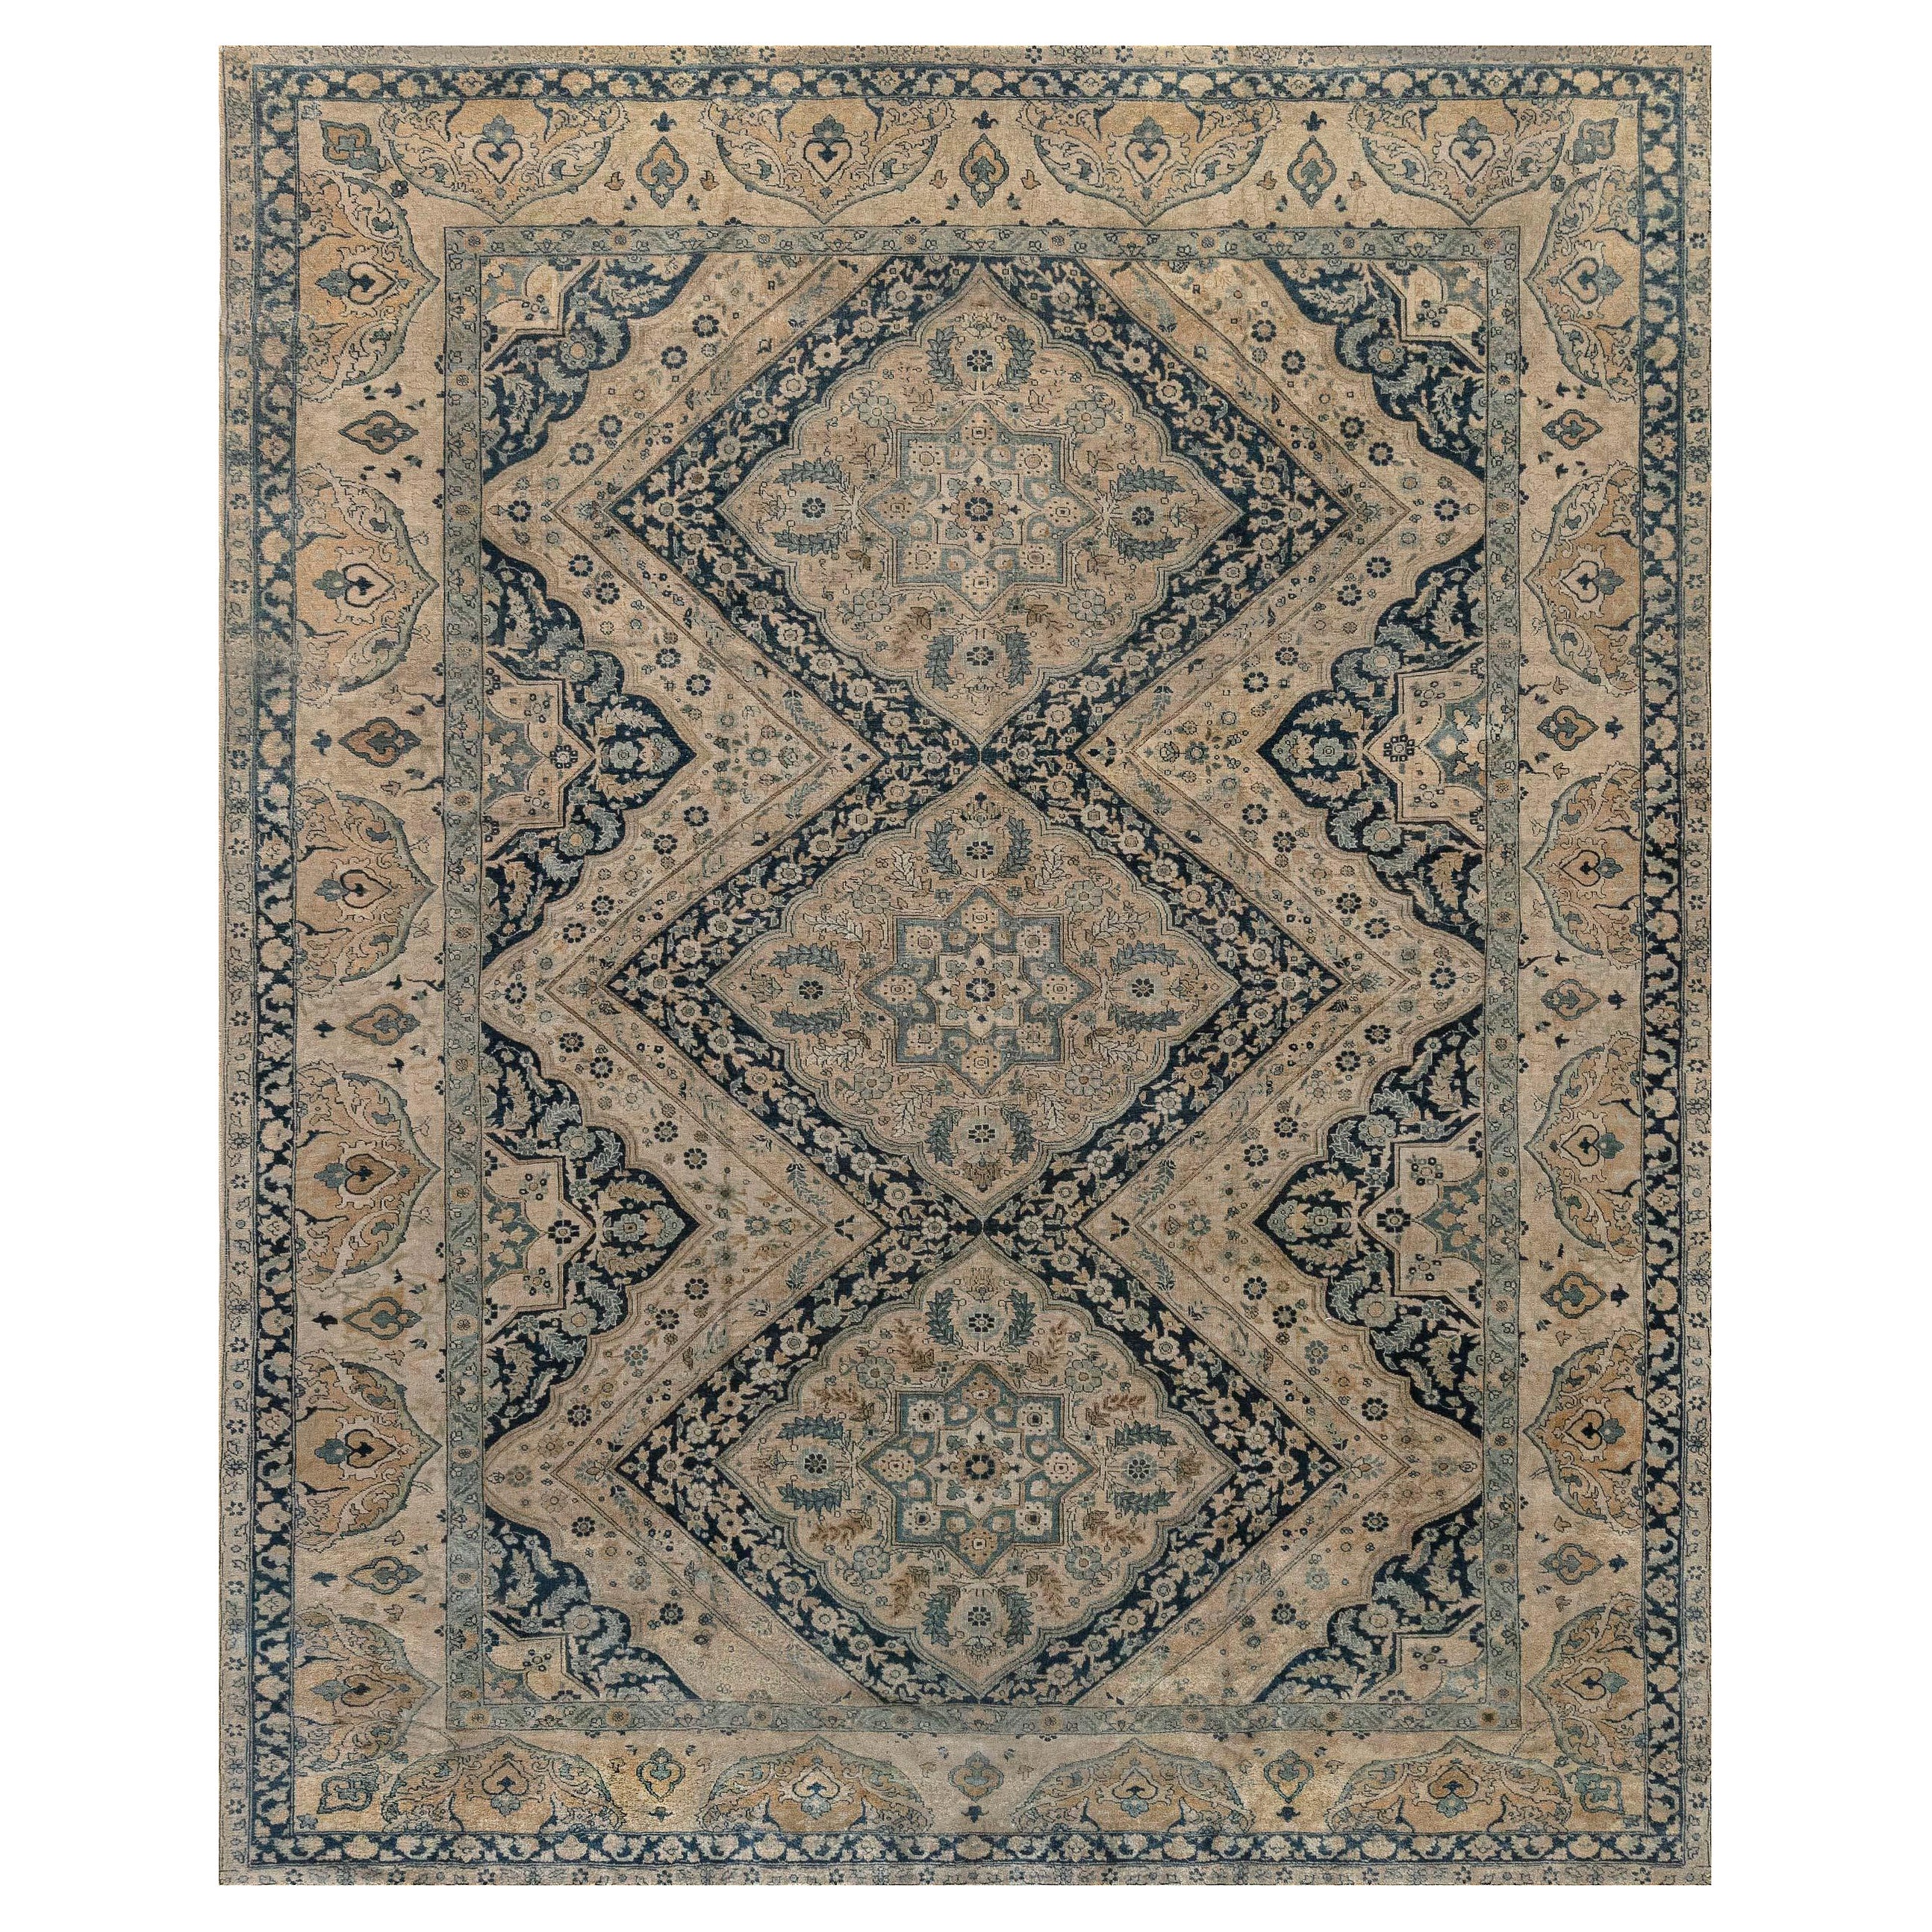 Early 20th Century Persian Tabriz Handmade Carpet